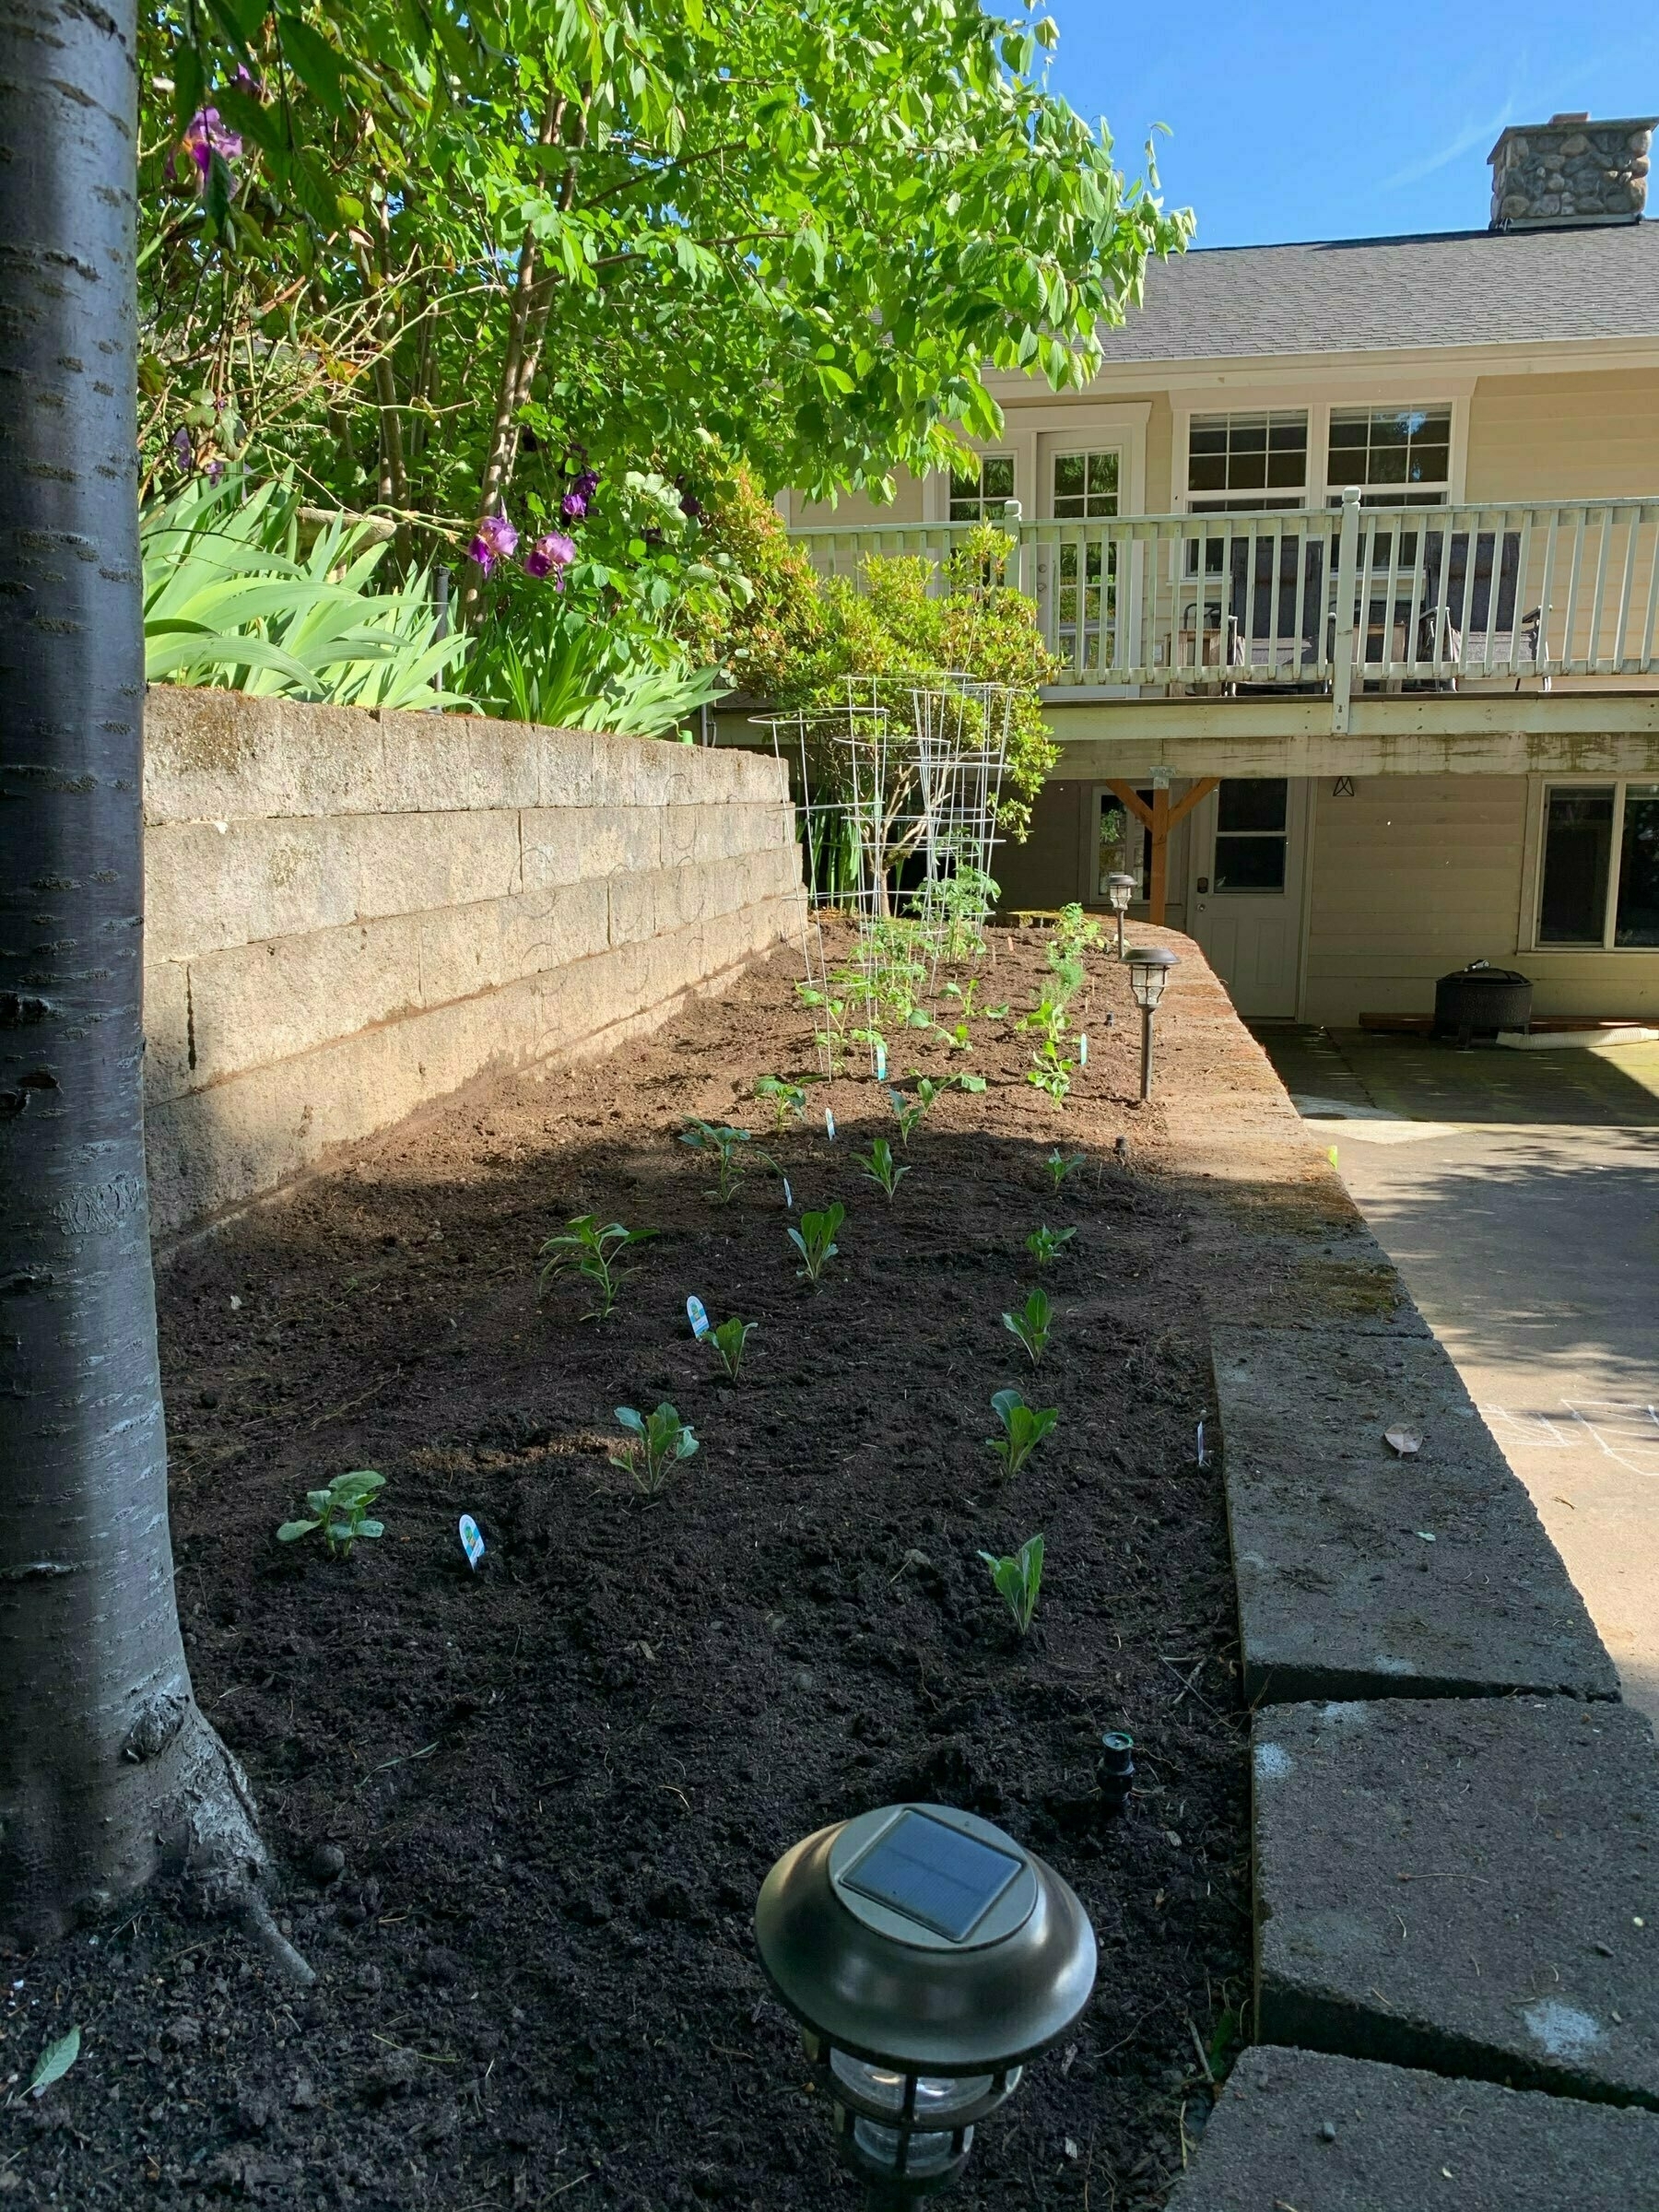 May 17, veggie garden planted